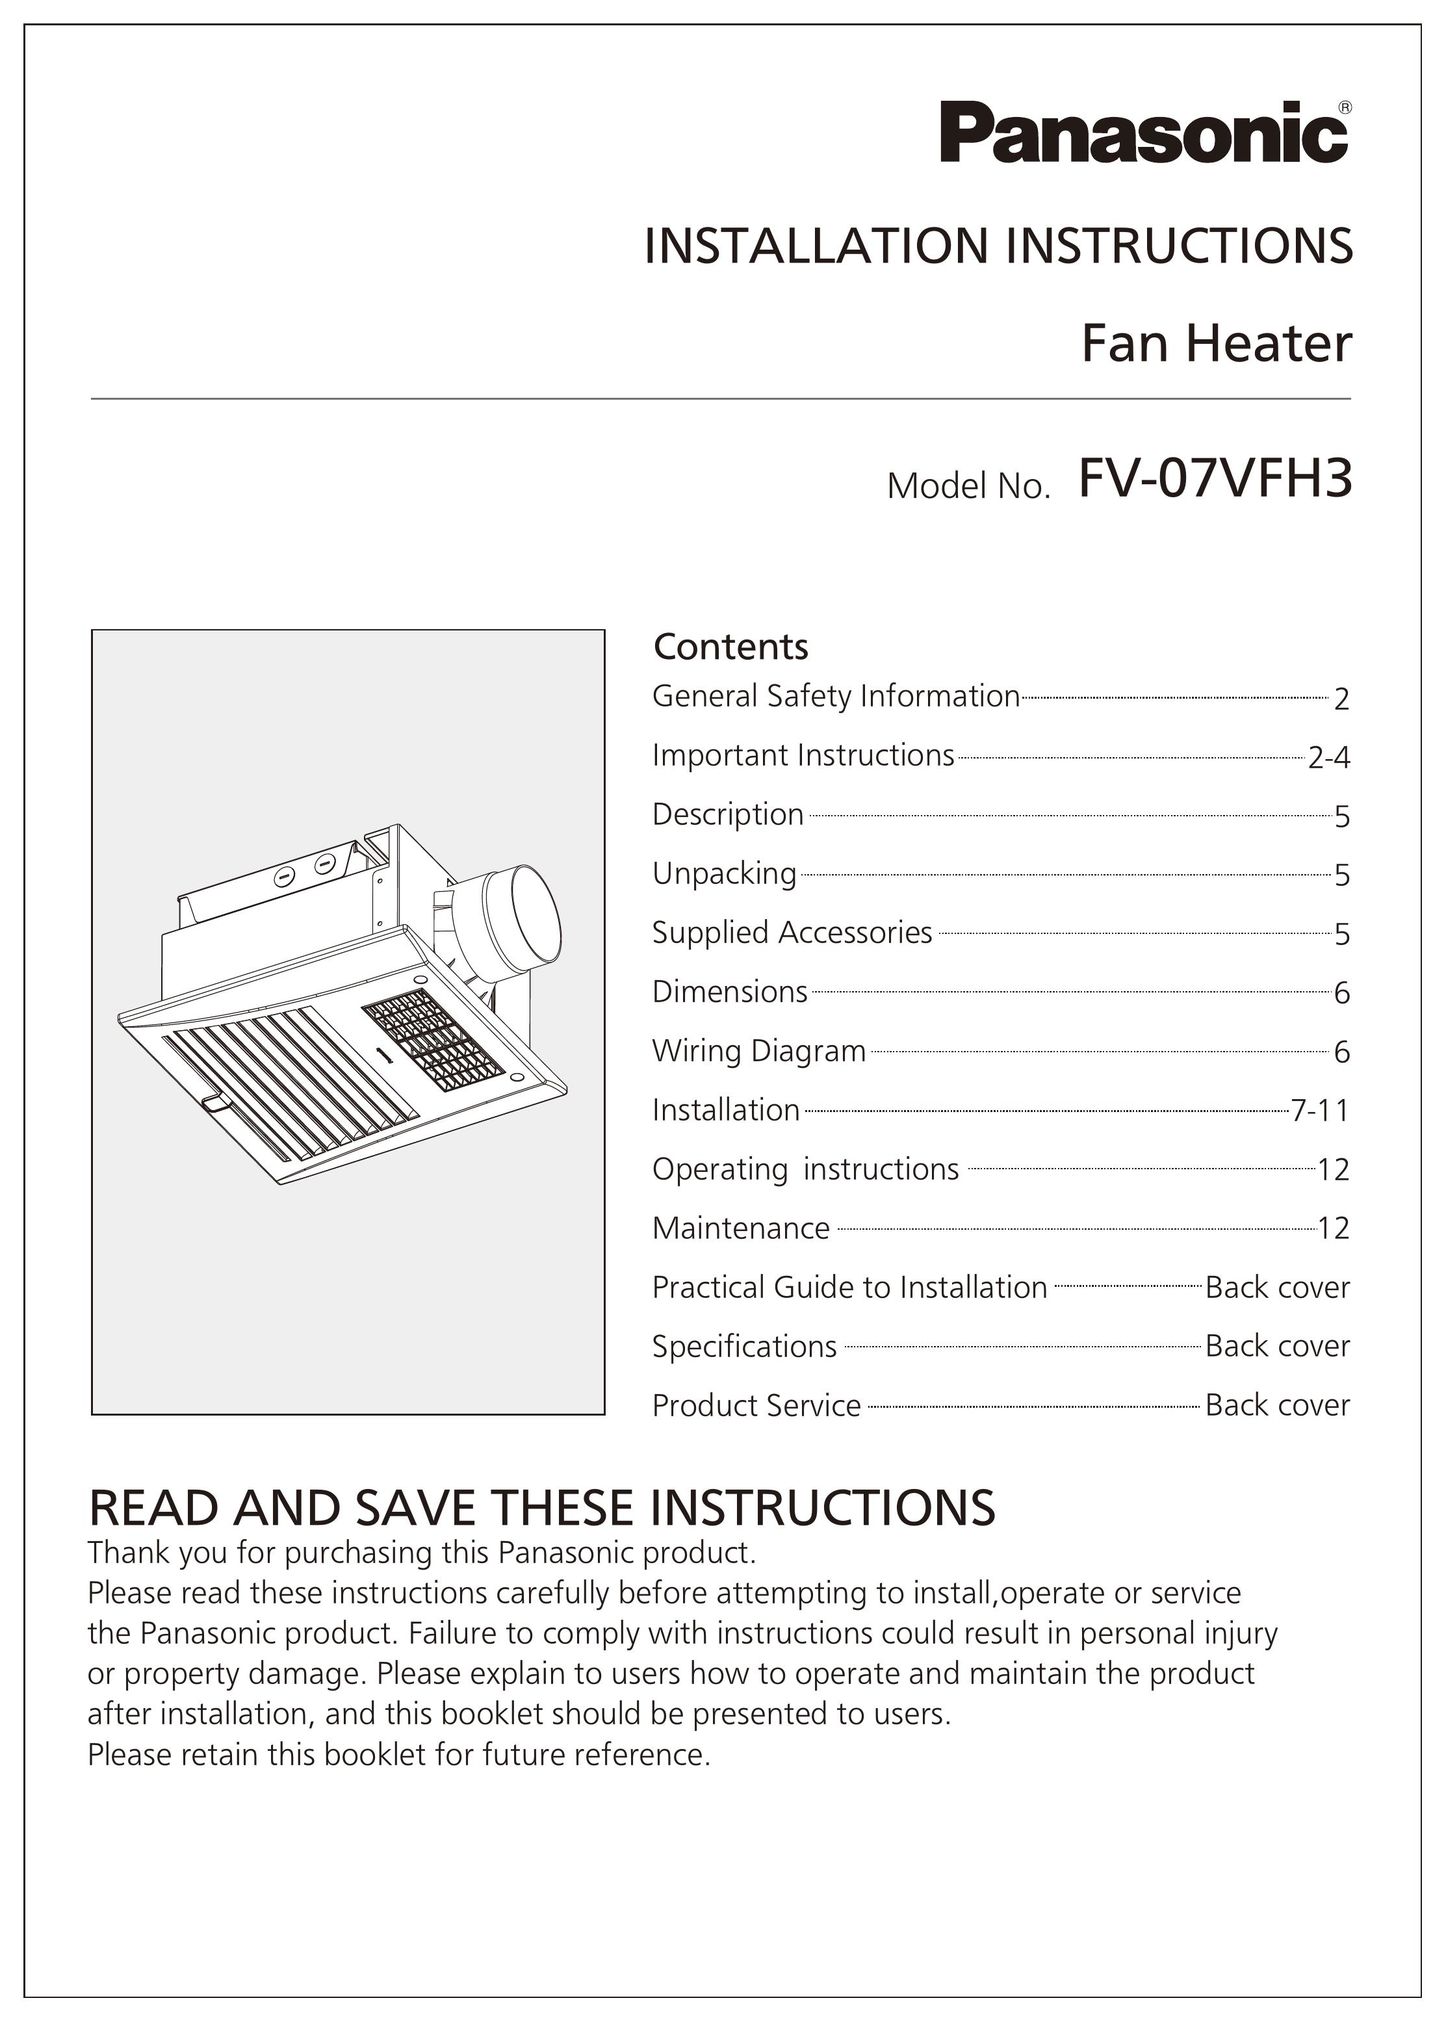 Panasonic FV-07VFH3 Fan User Manual